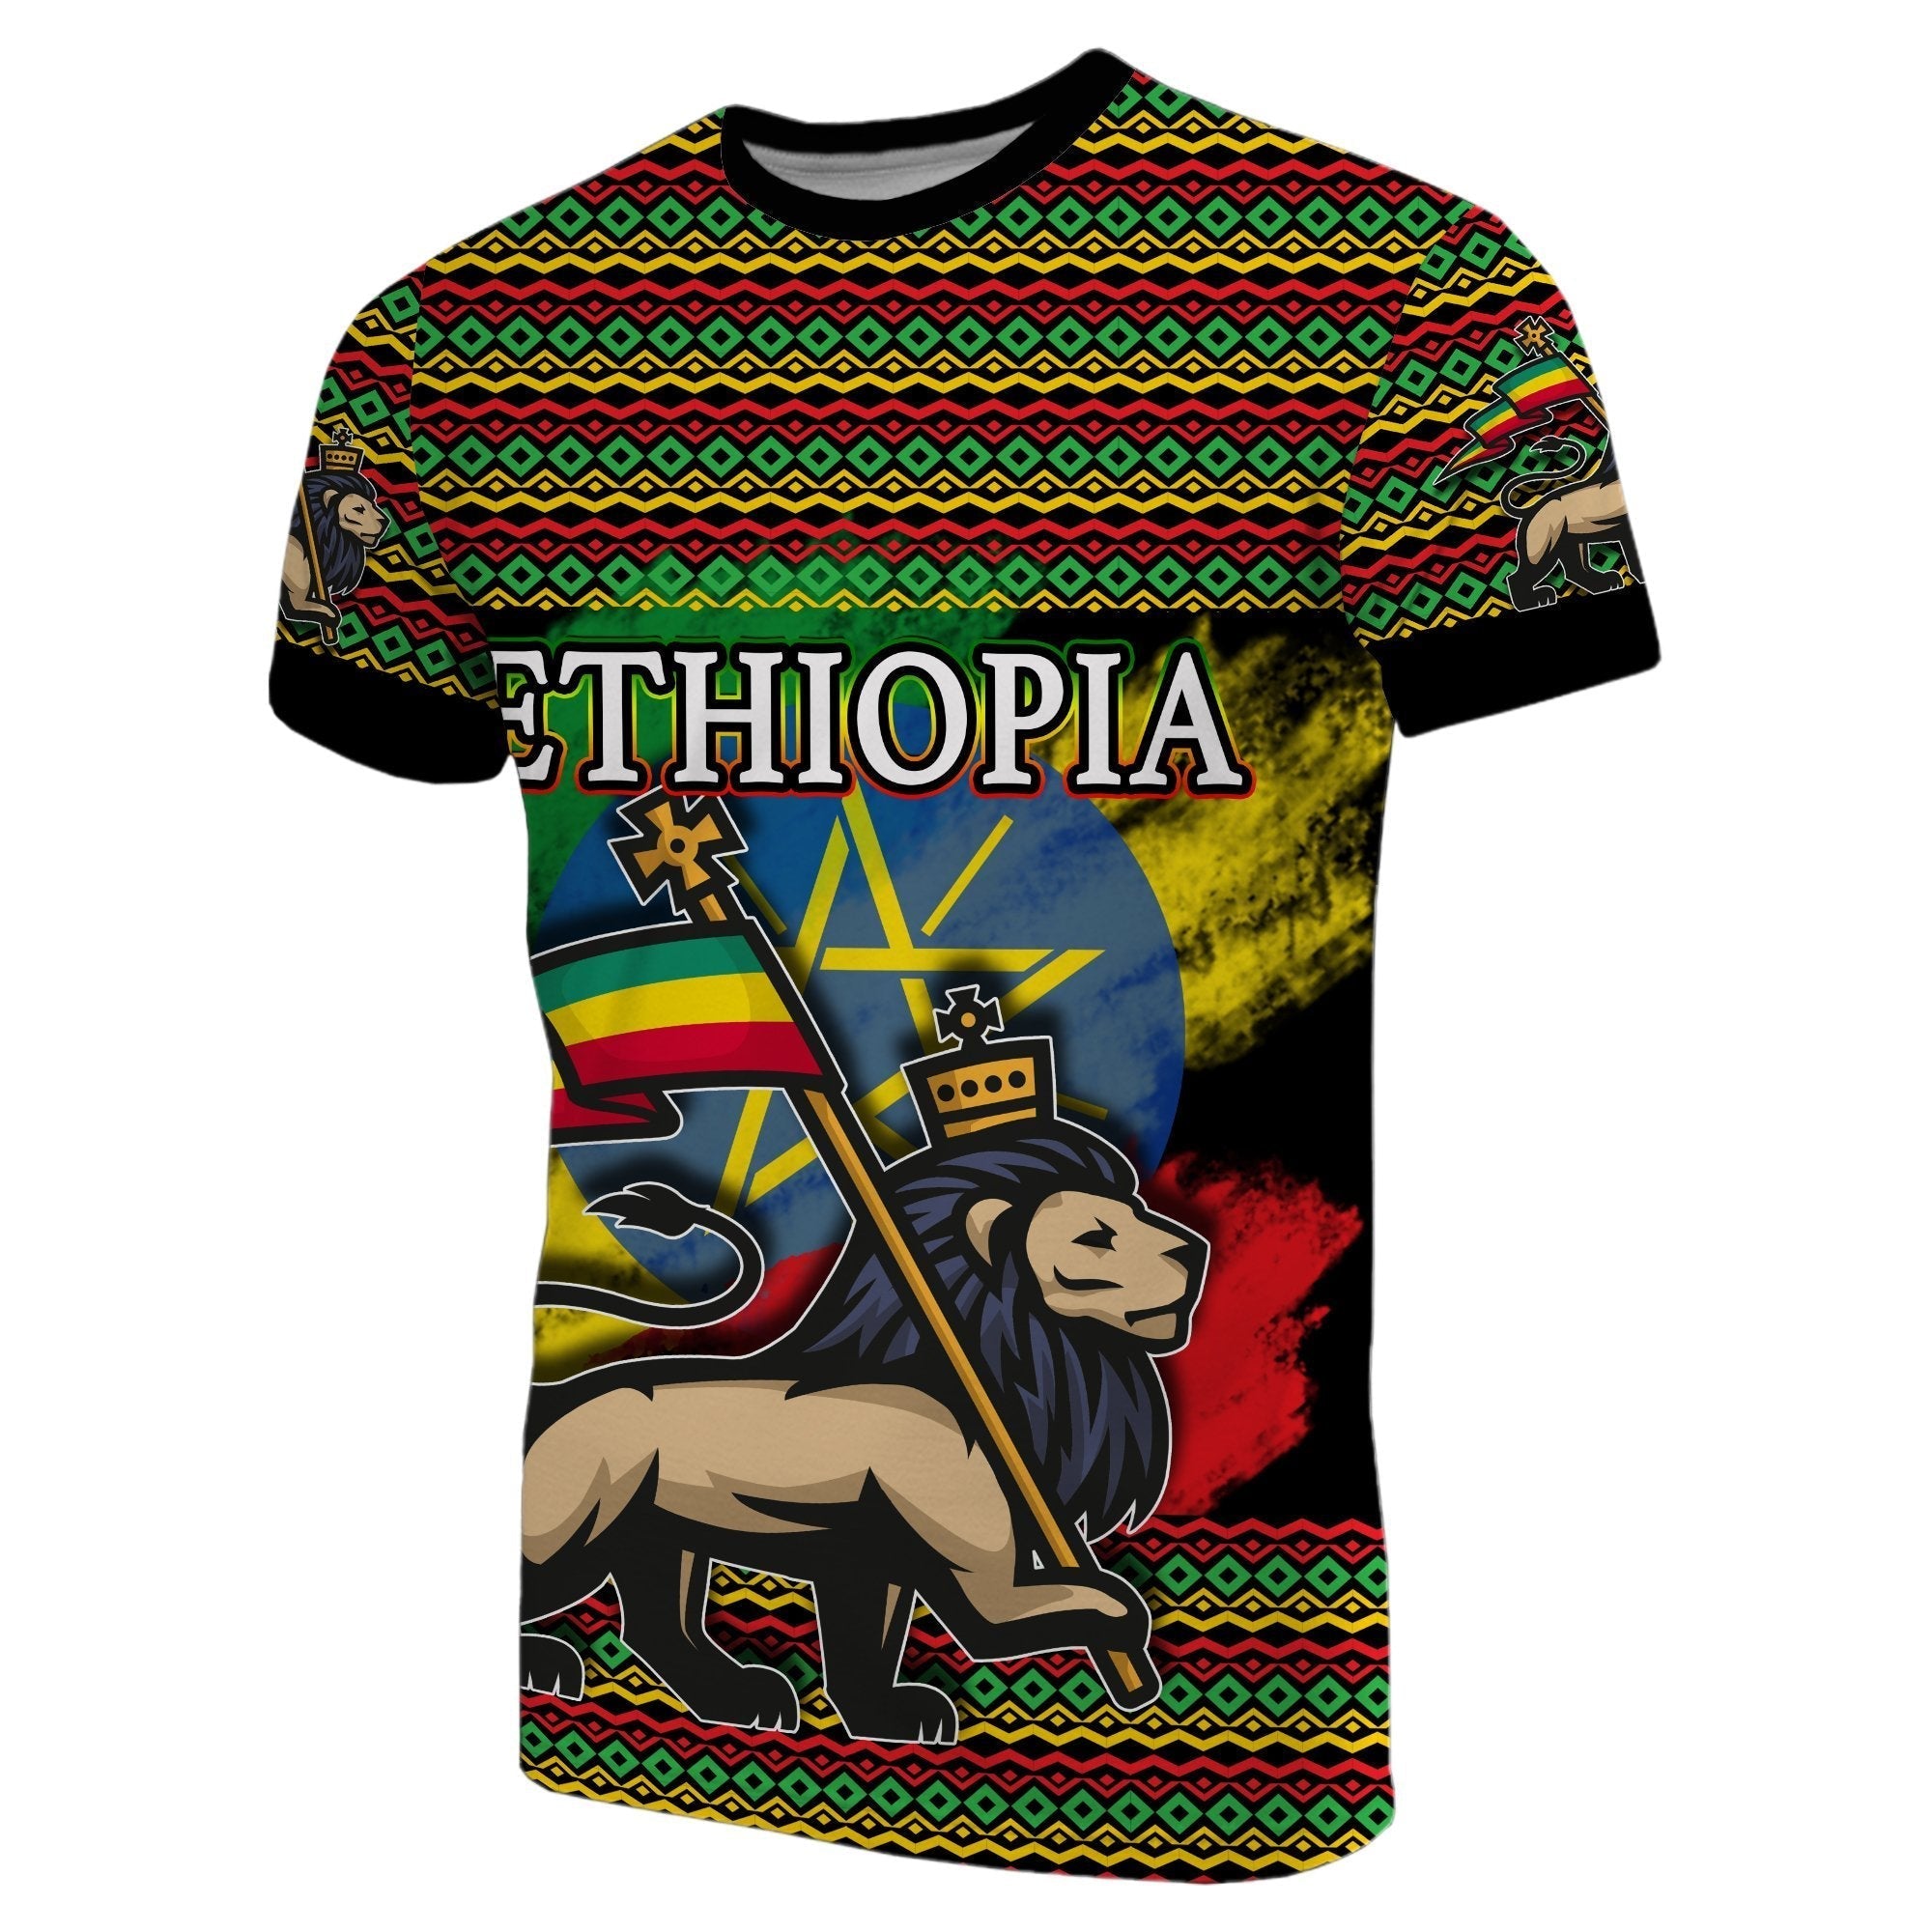 ethiopia-t-shirt-lion-of-judah-flag-grunge